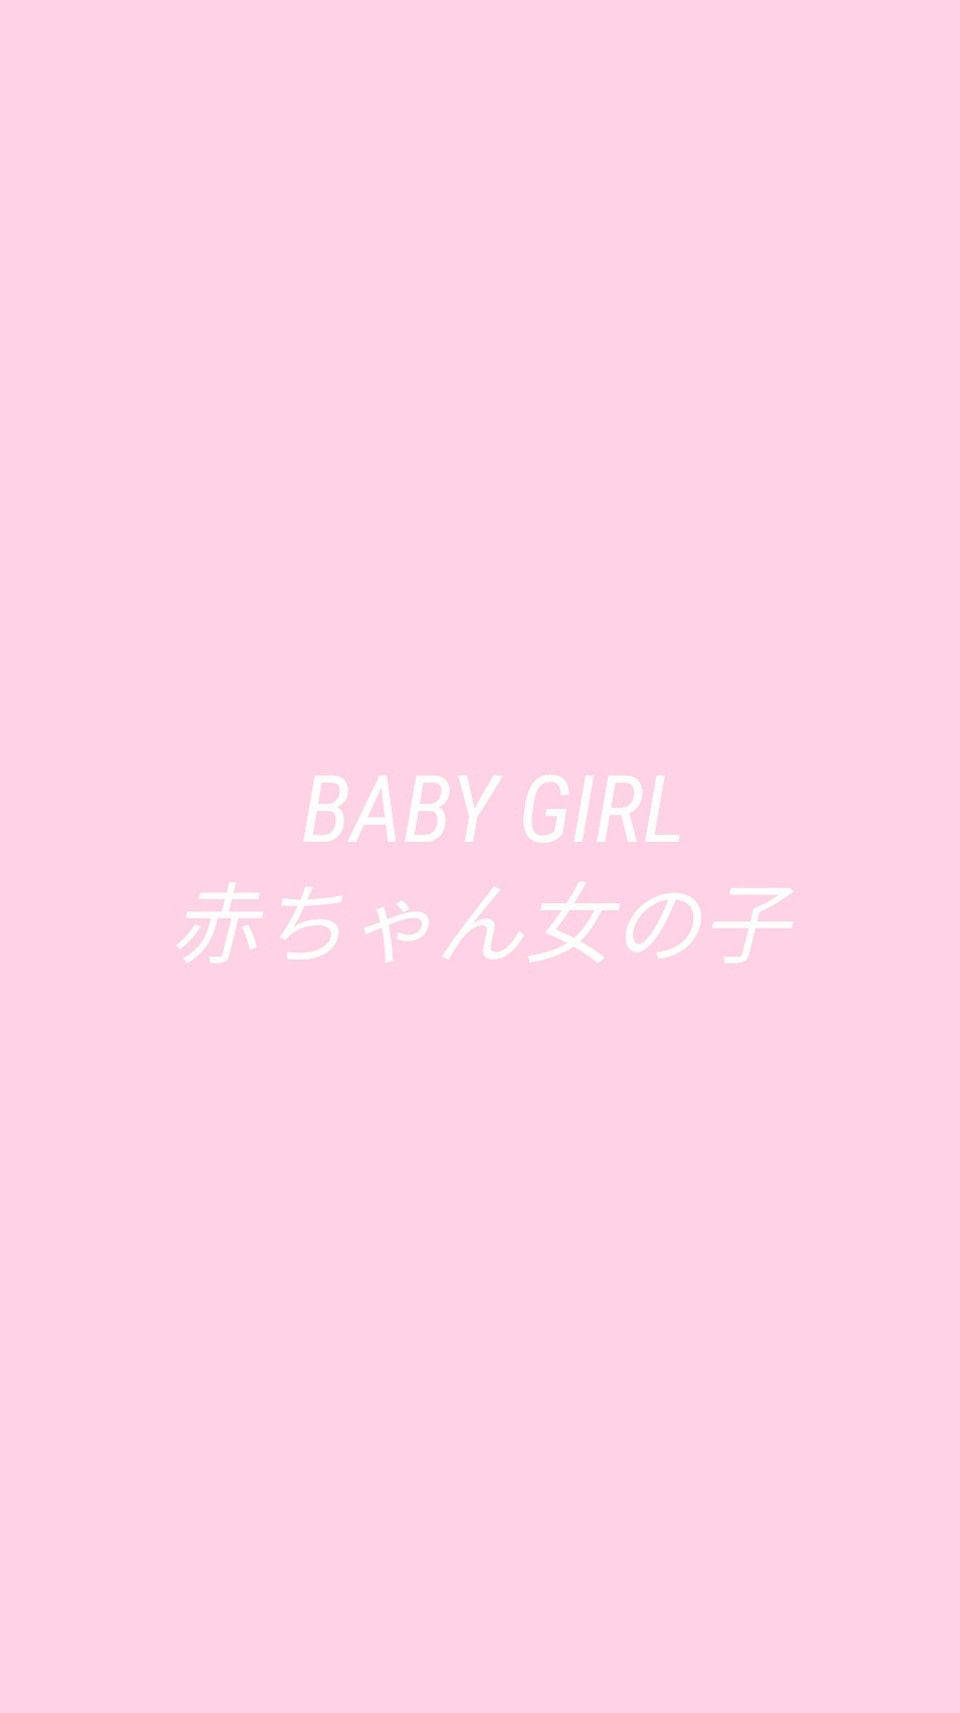 Baby Girl Pink Preppy Wallpaper